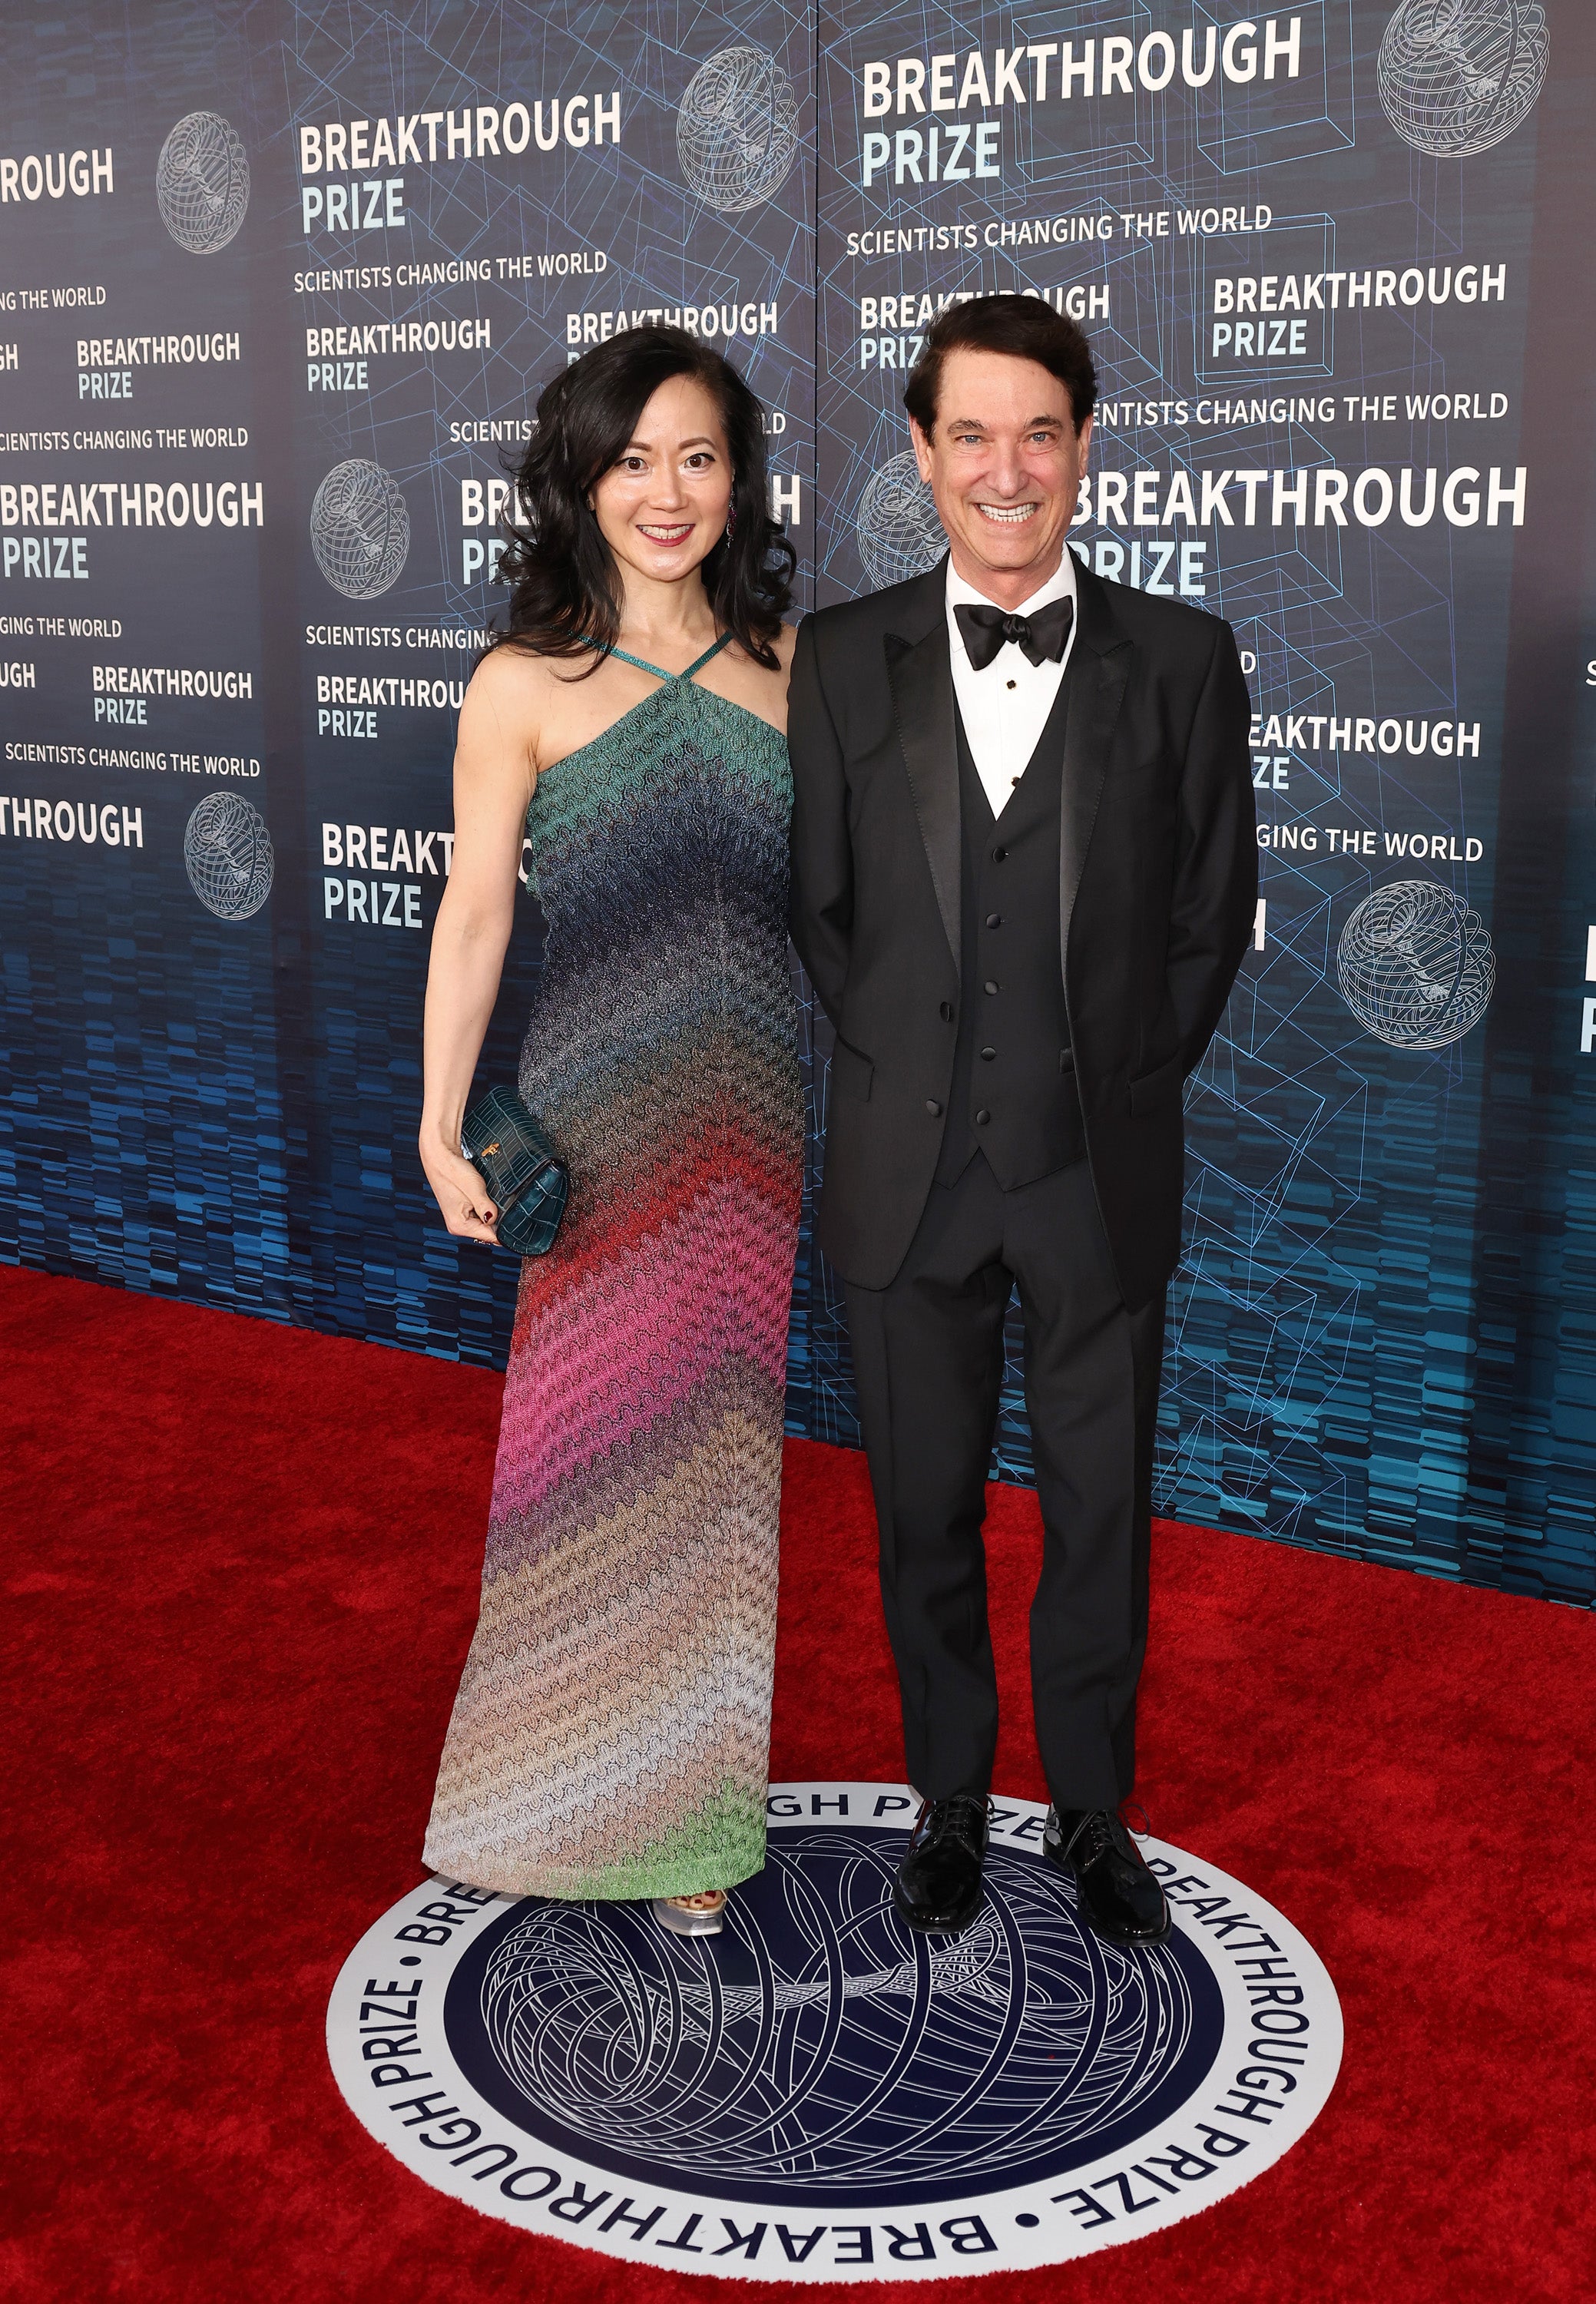 Angela Chao and her husband Jim Breyer, an American venture capitalist